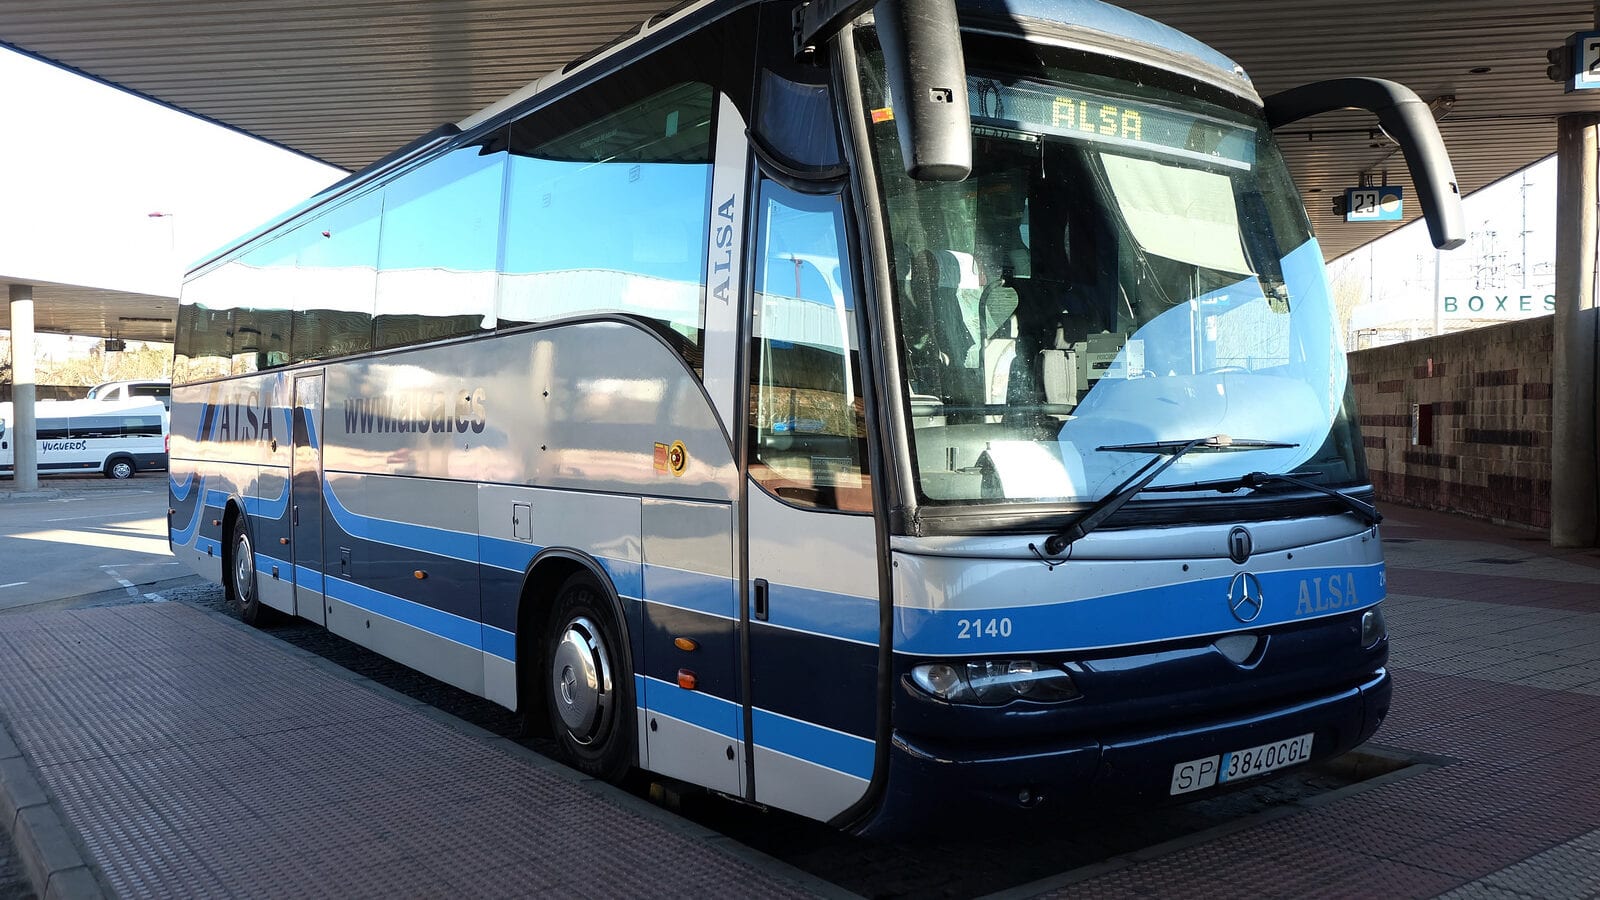 Alsa Bus in Spain